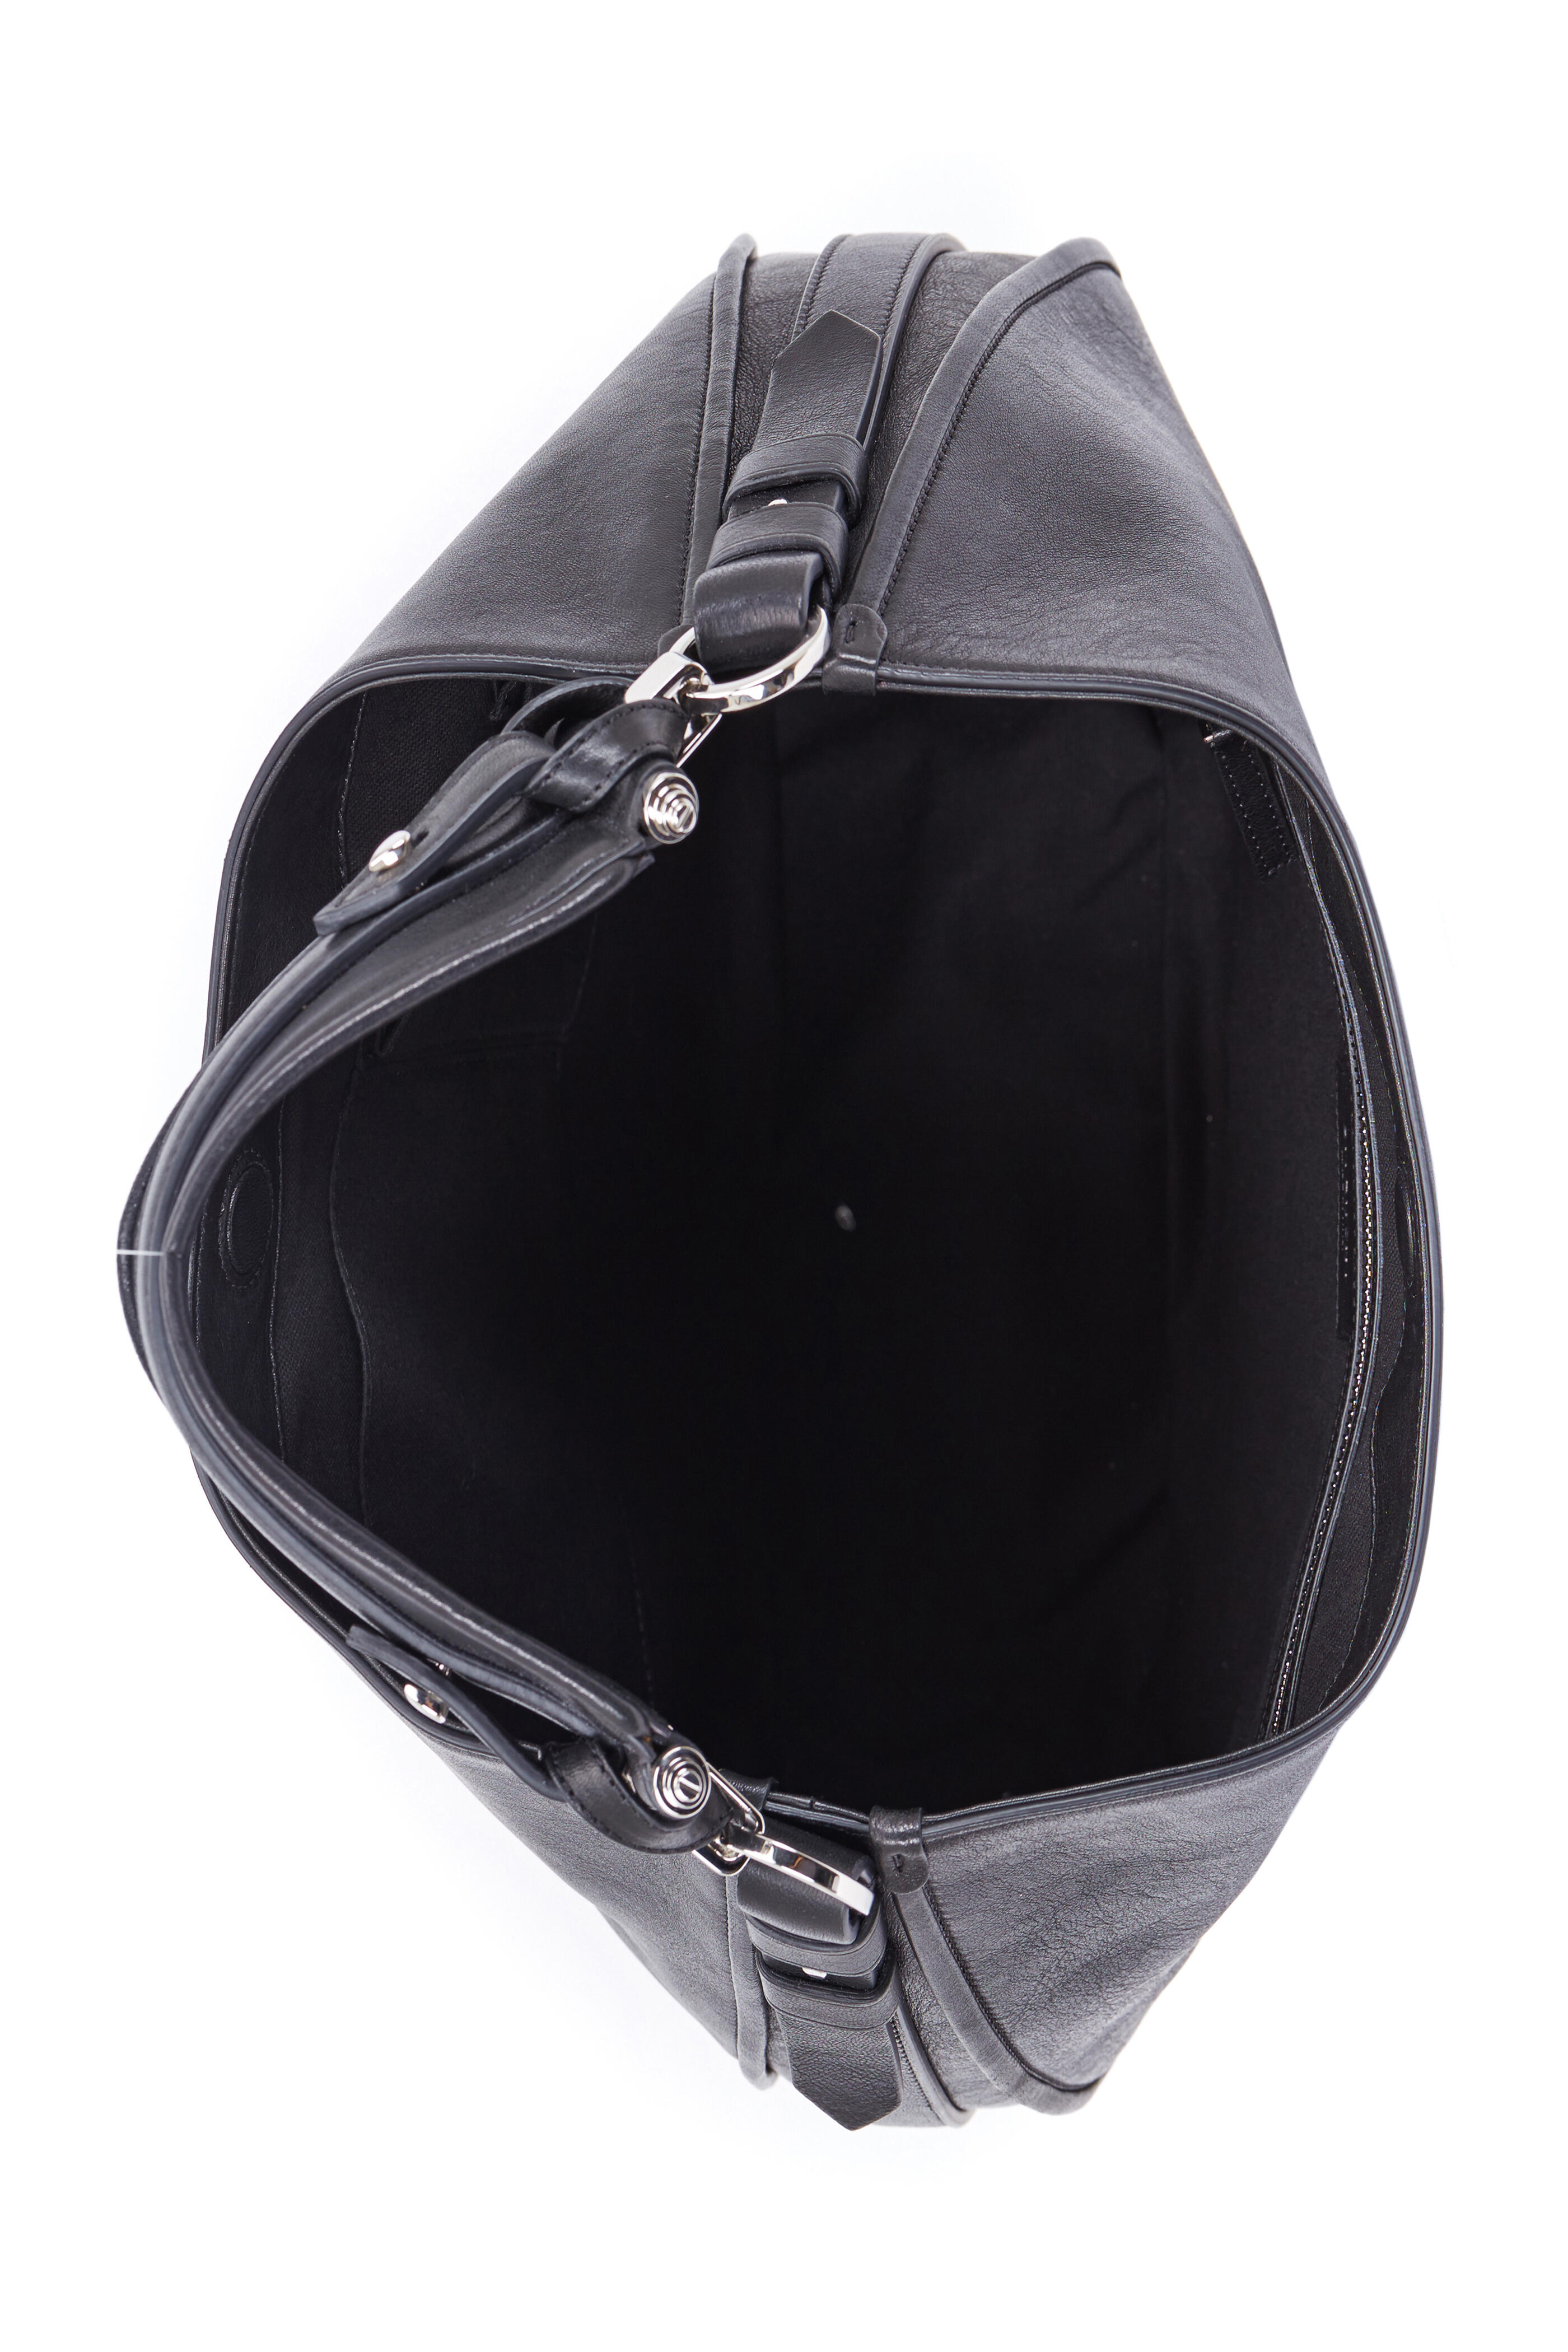 Givenchy Extra Large Hobo Black Grained Leather Shoulder Bag